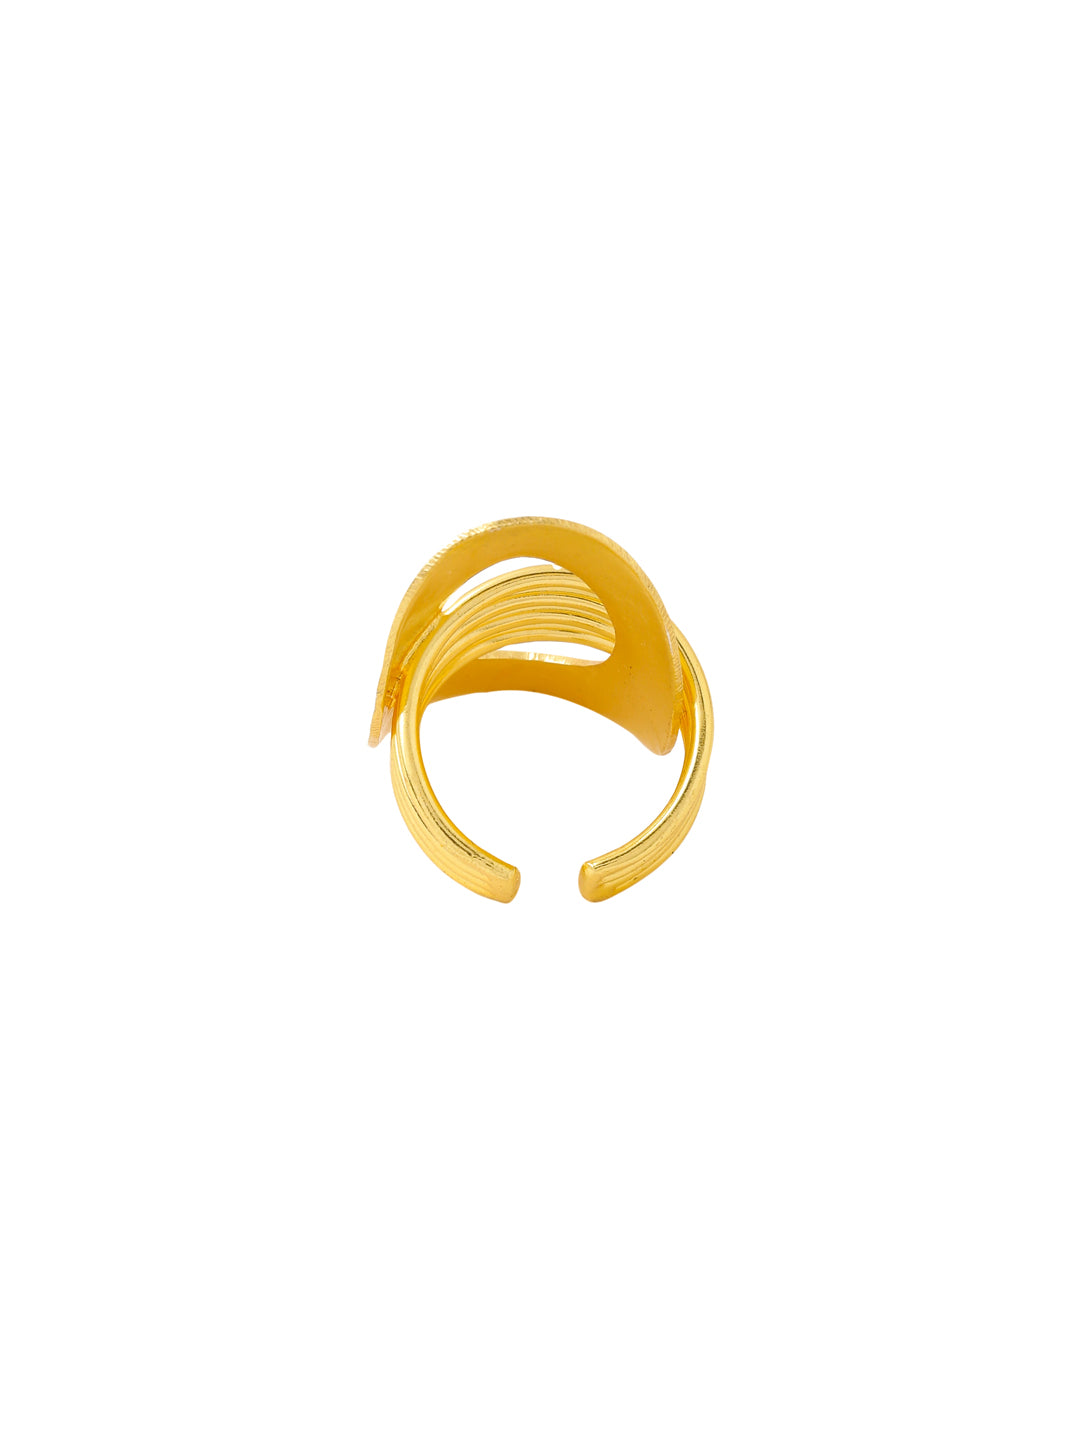 Women's Western Gold Plated Adjustable Finger Ring - NVR